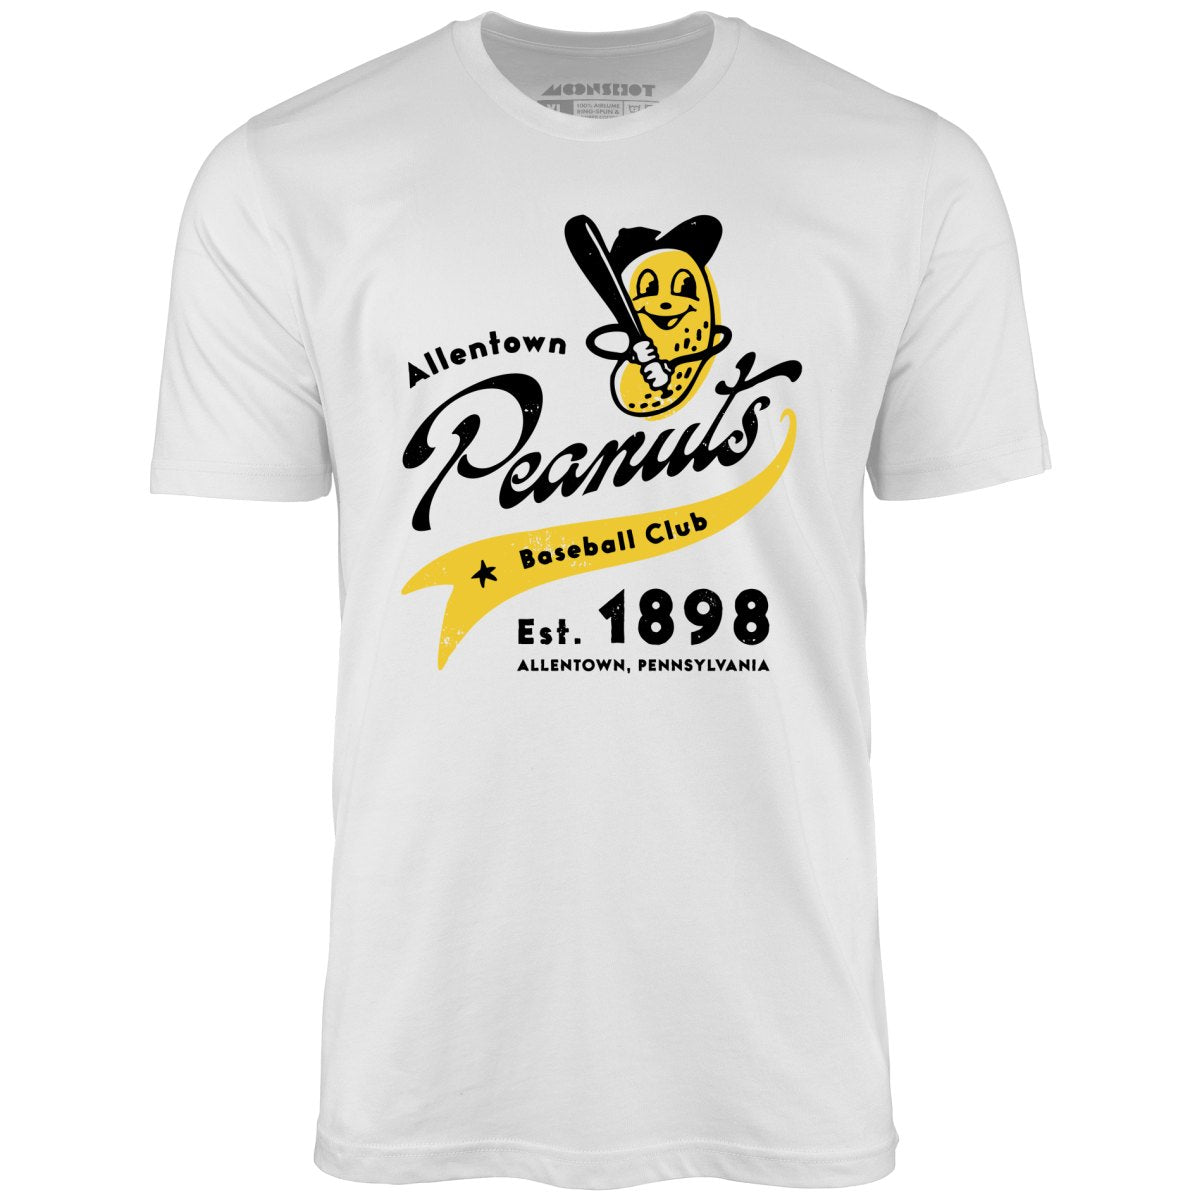 Allentown Peanuts - Pennsylvania - Vintage Defunct Baseball Teams - Unisex T-Shirt